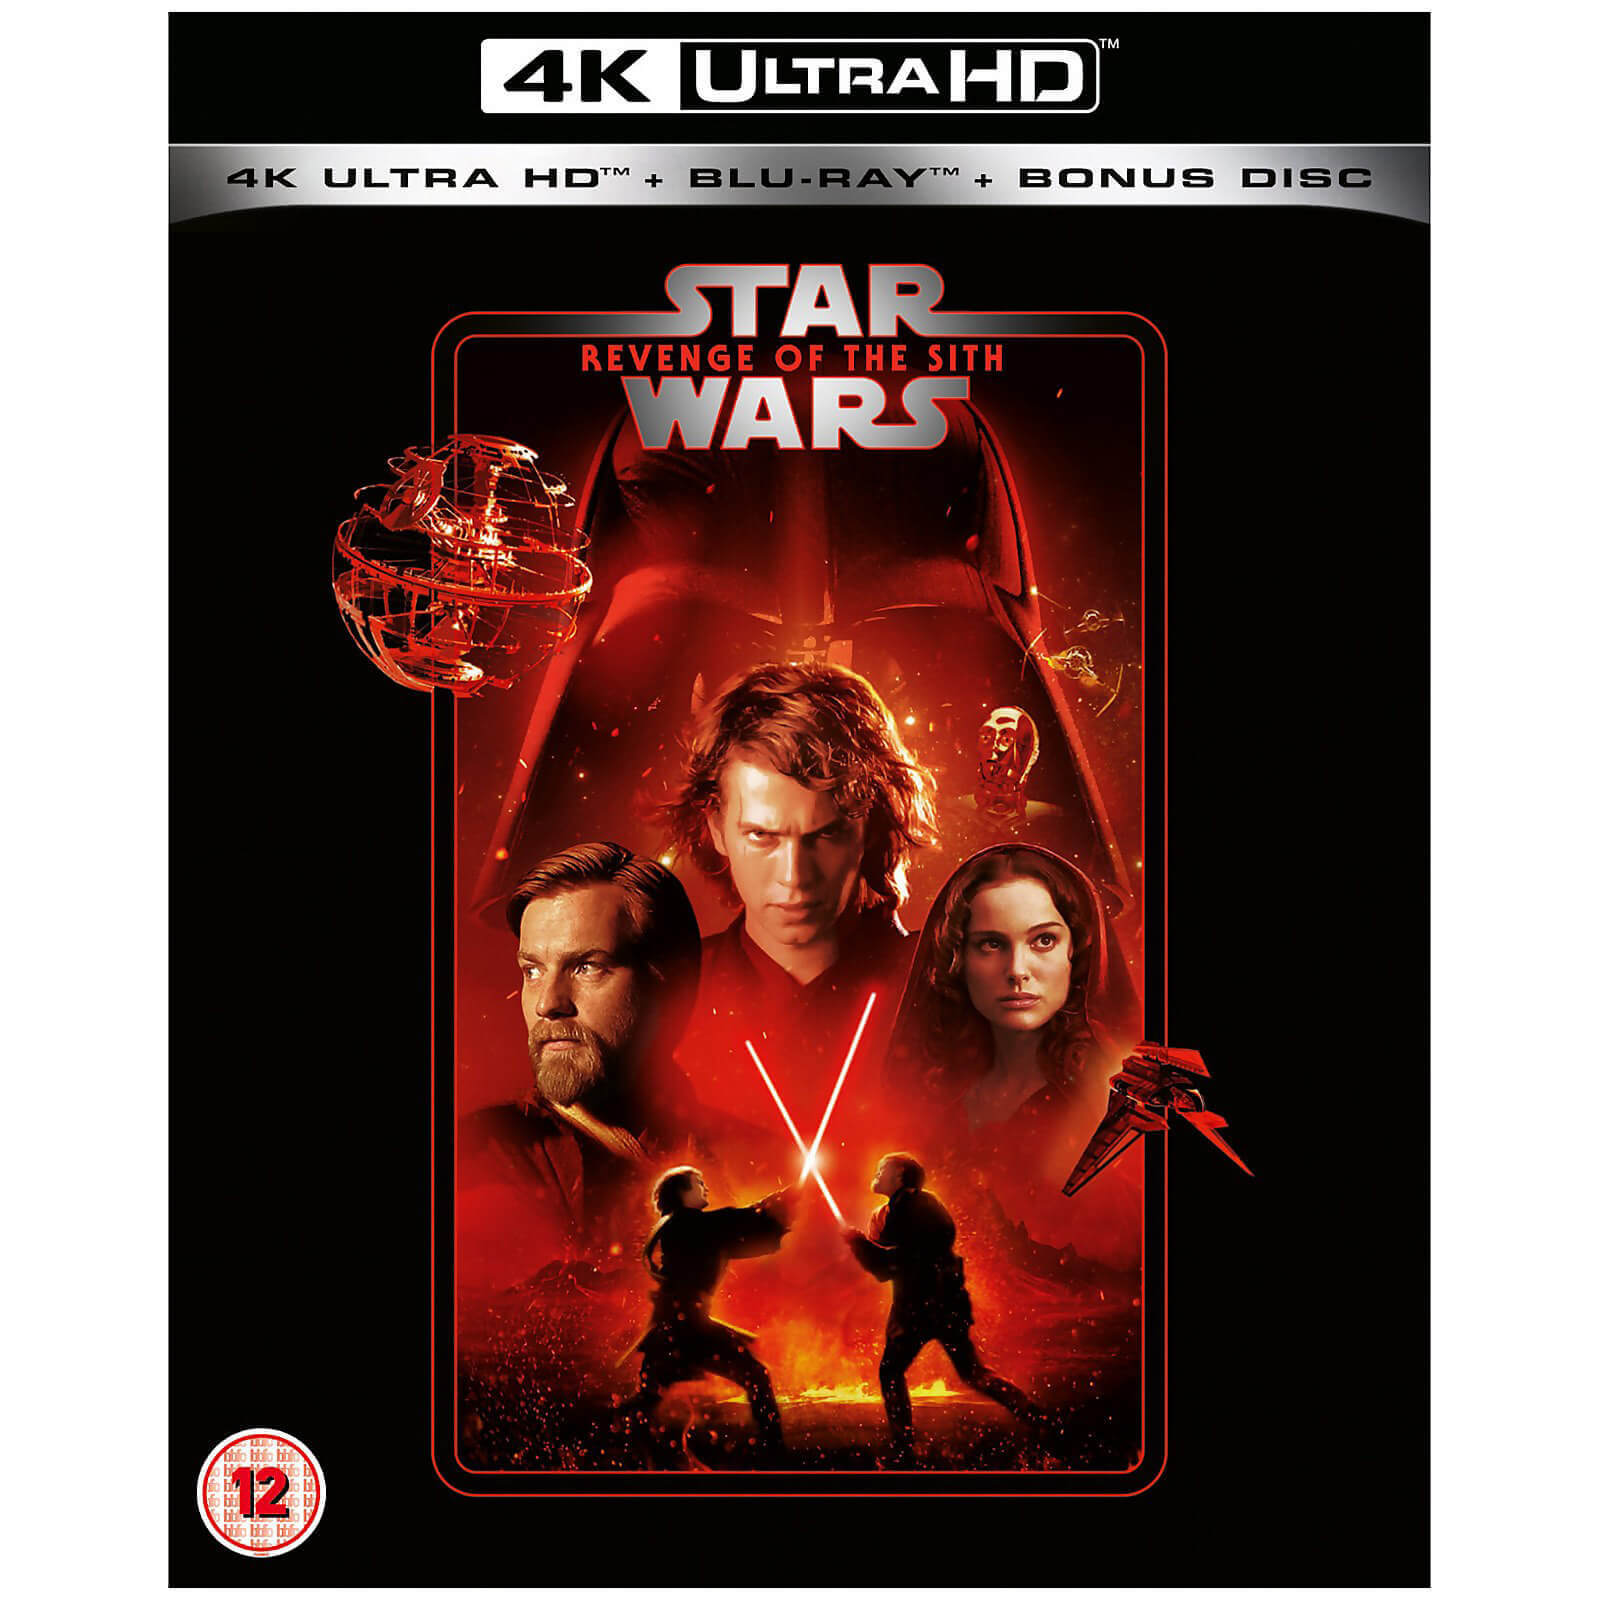 Star Wars - Episode III - La Revanche des Sith - 4K Ultra HD (Blu-ray 2D inclus)